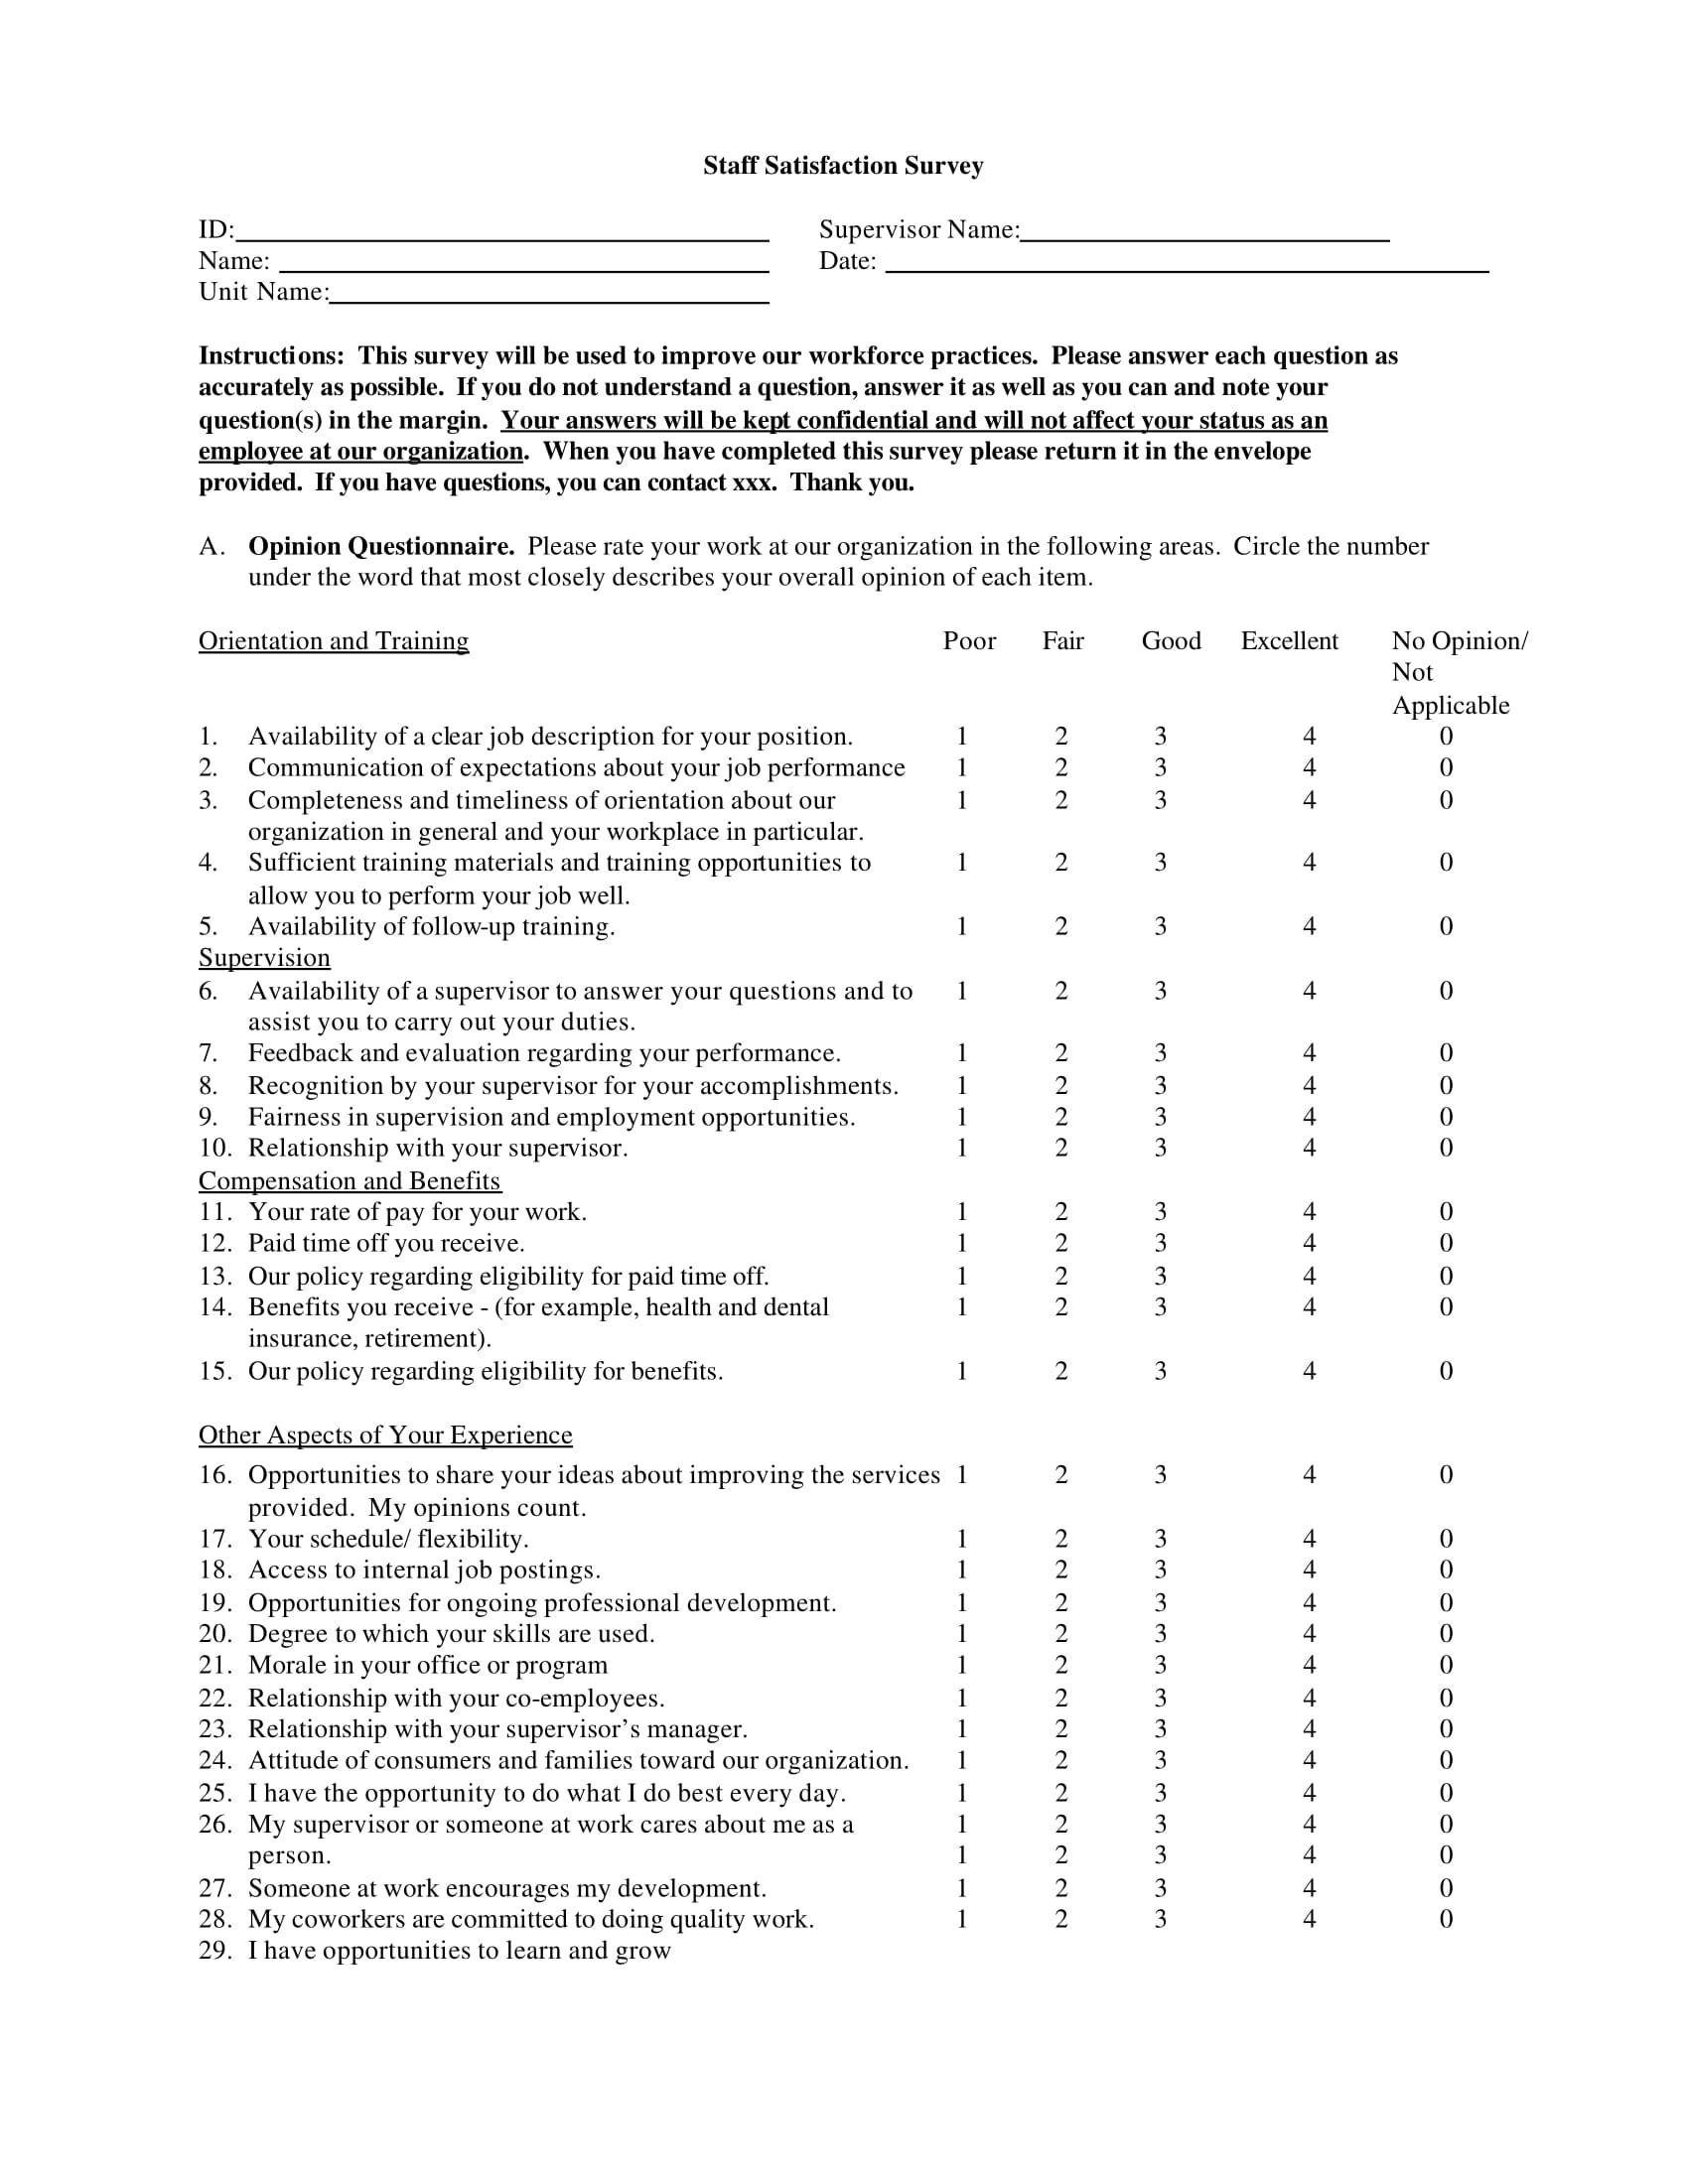 staff satisfaction survey example1